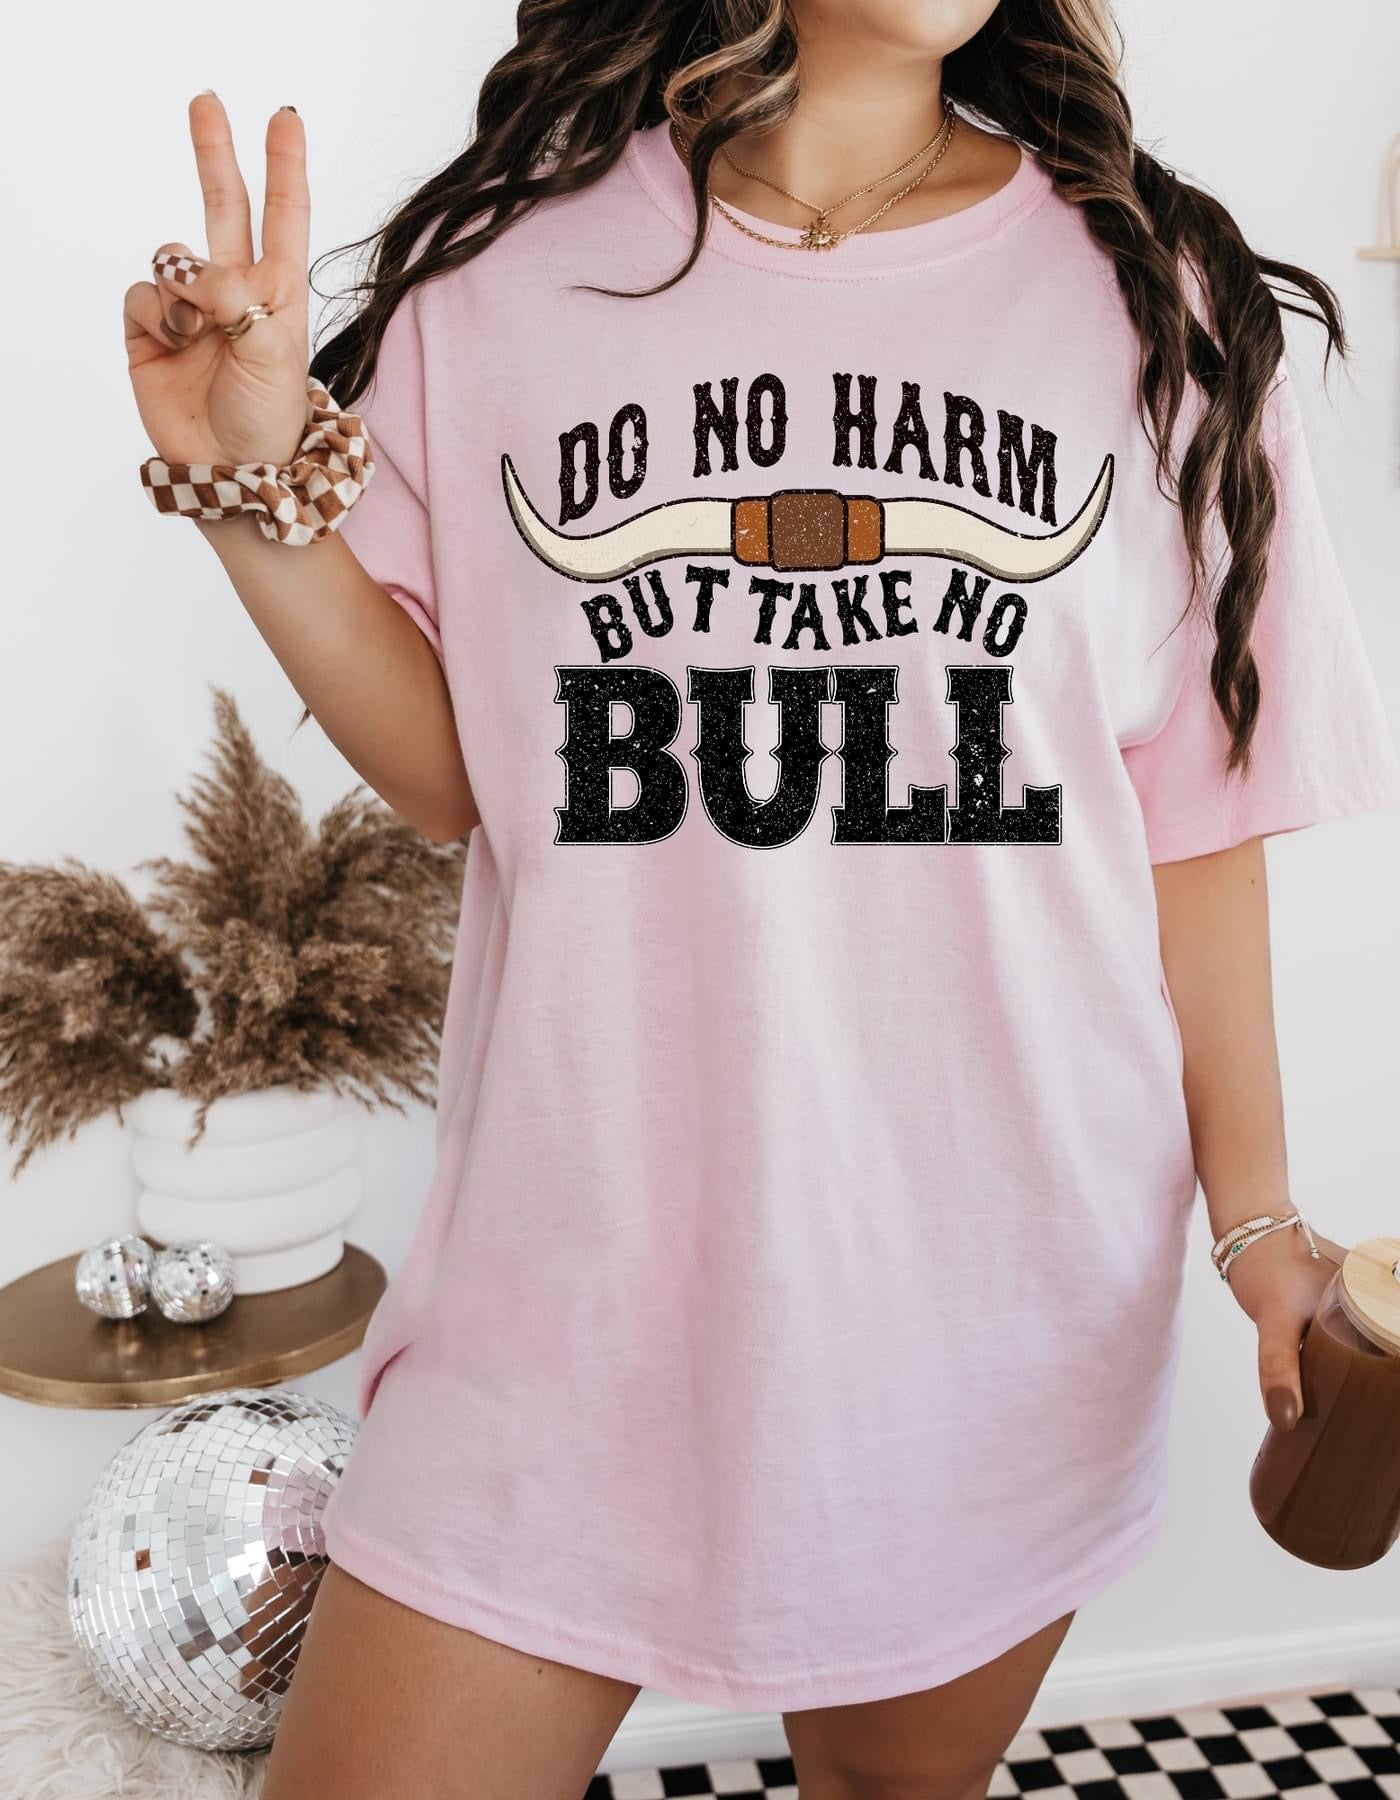 Take No BullGraphic T-Shirt